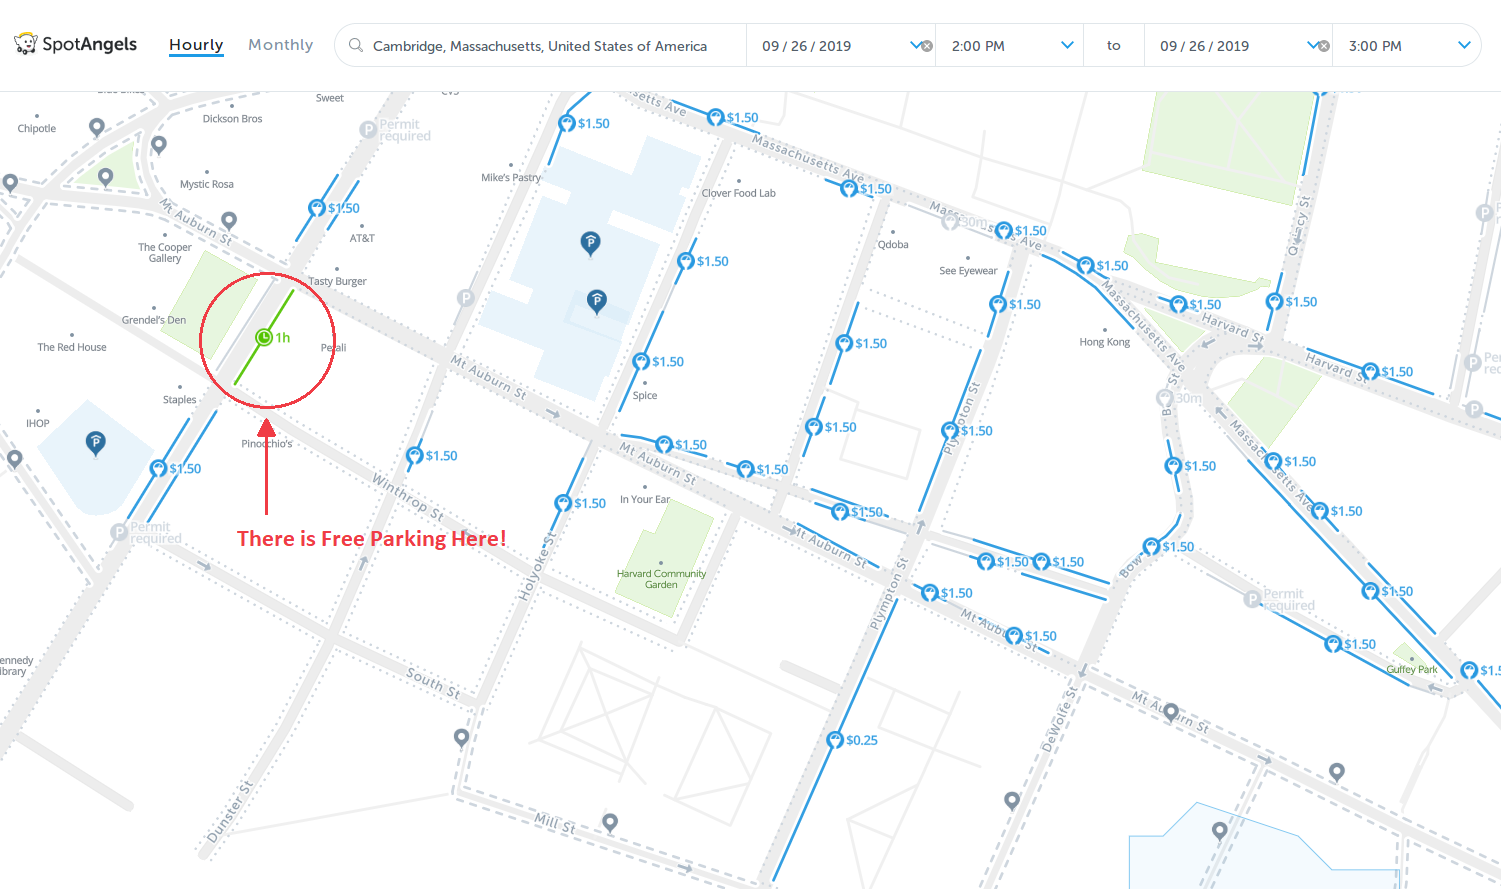 map of free parking in Cambridge - SpotAngels